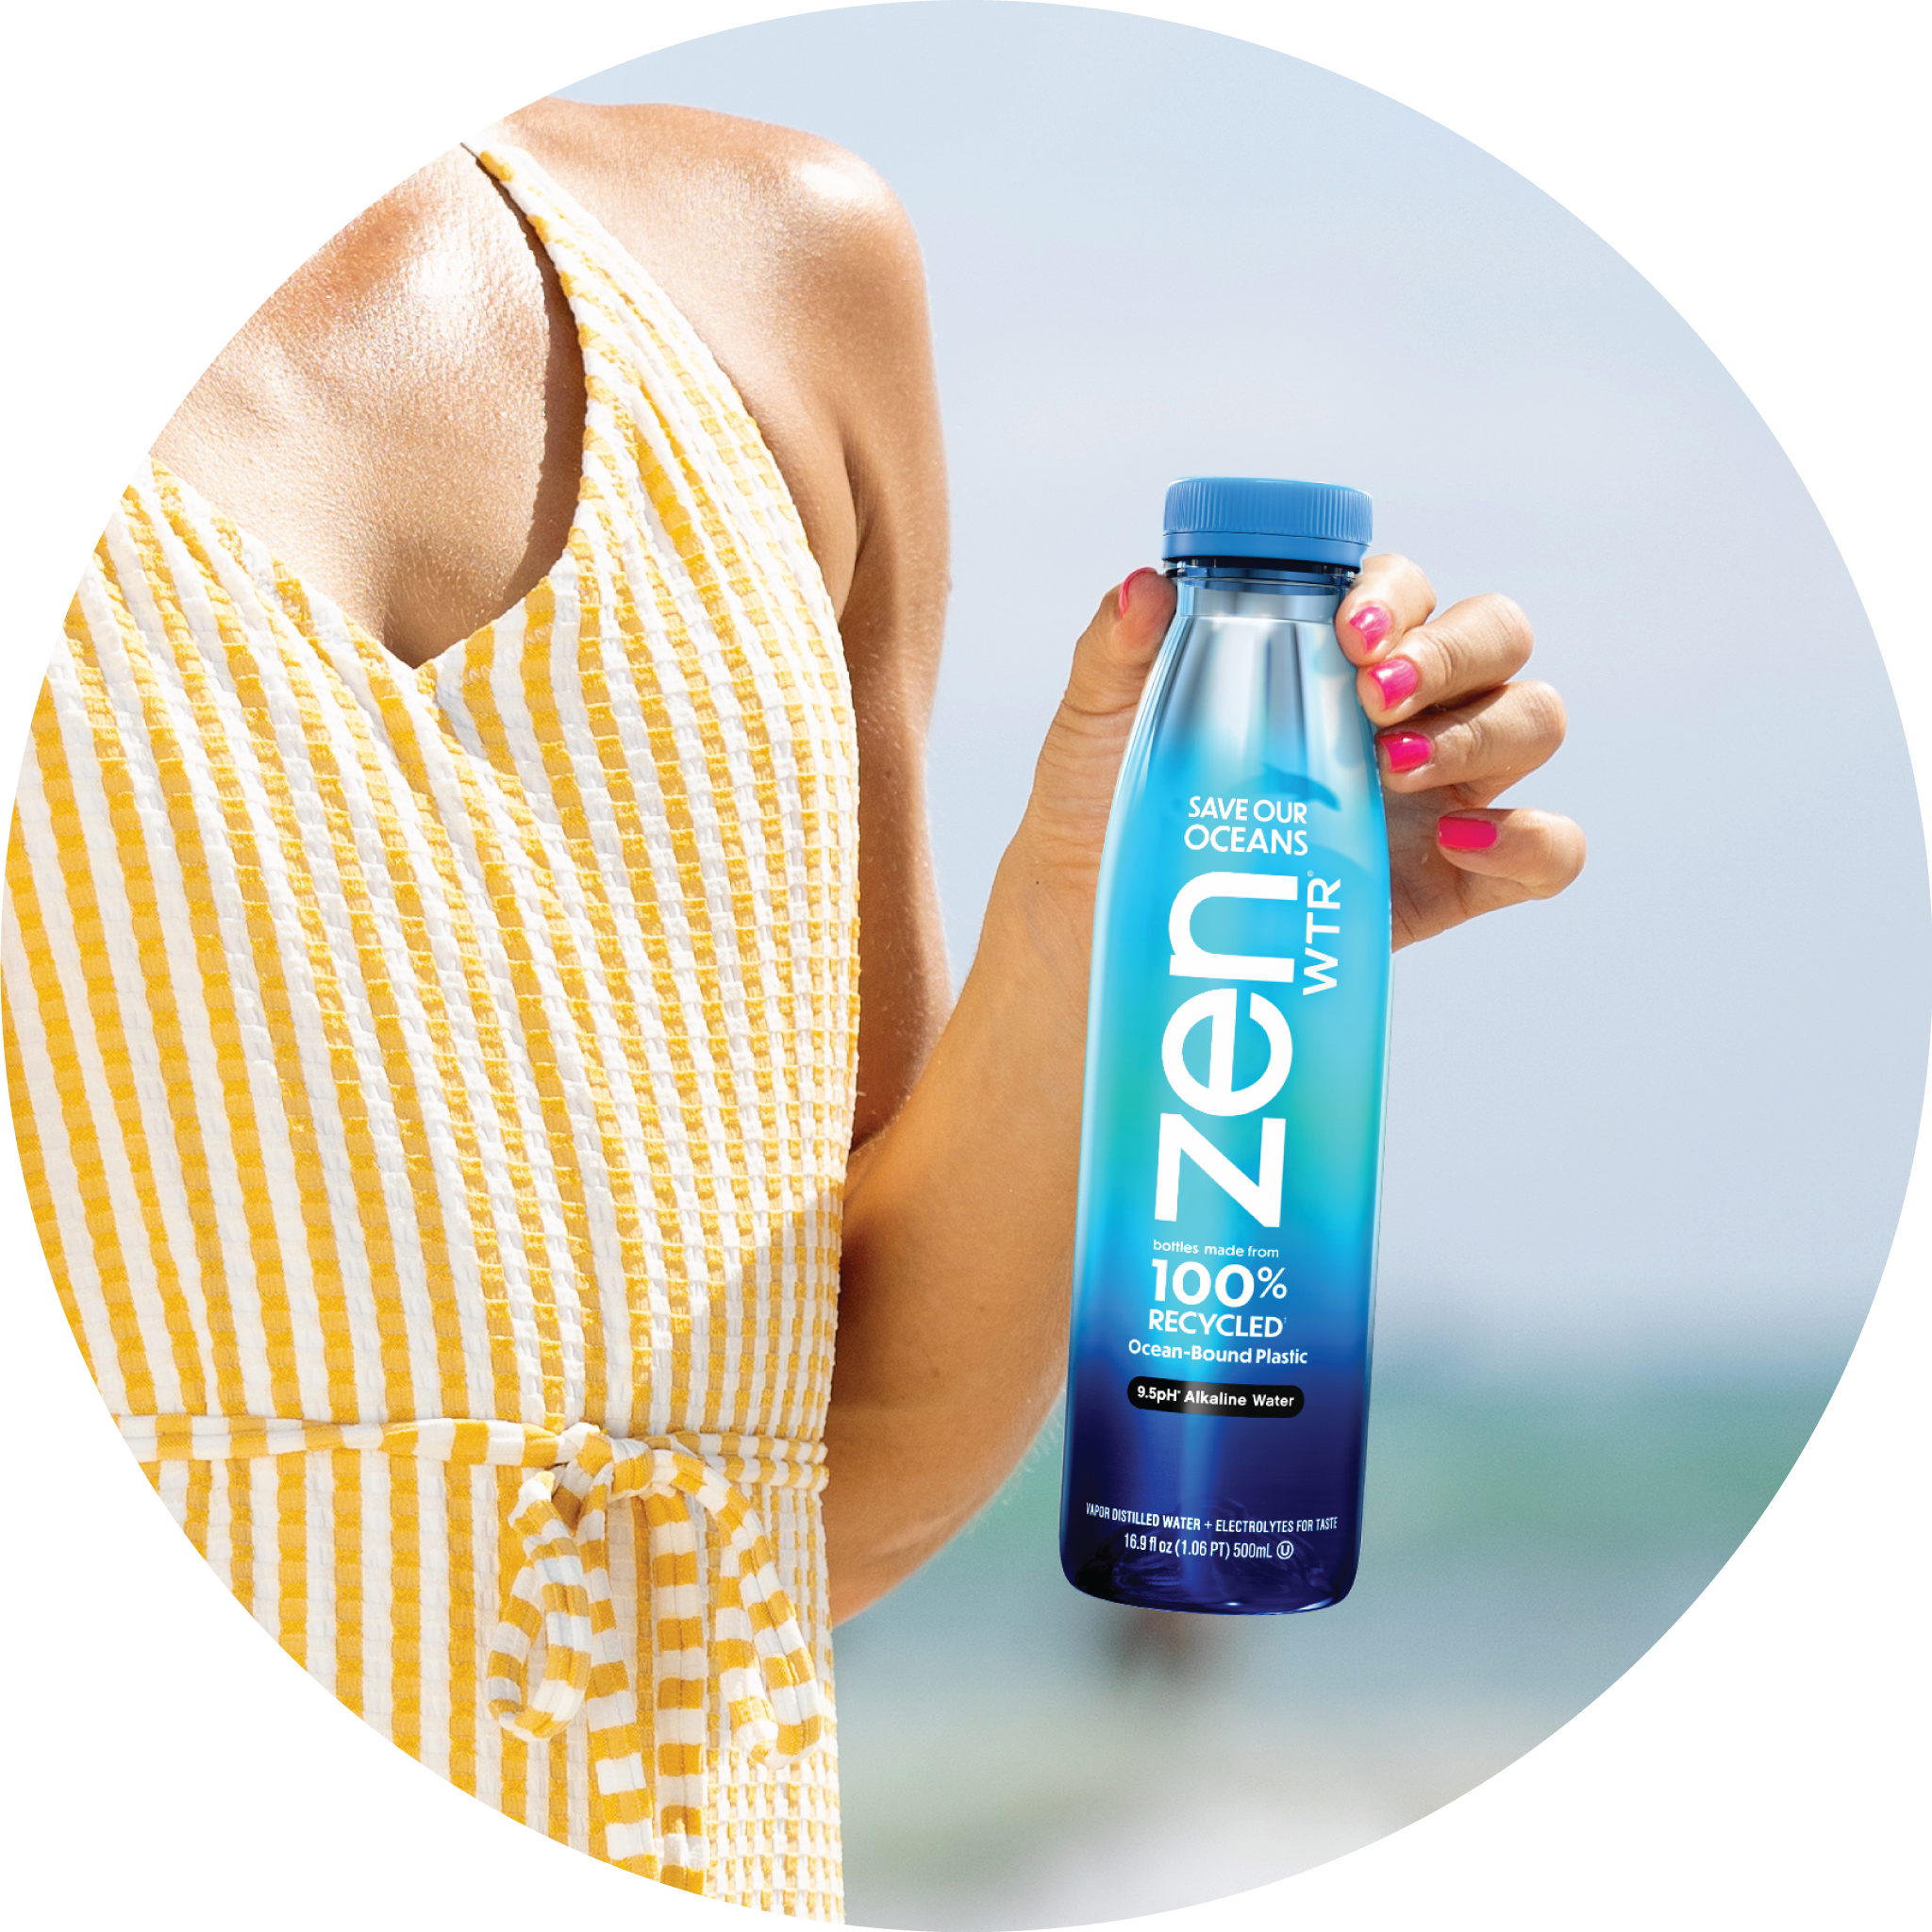 Grab Your @ZenWTR #zenalkaline #dailyroutine #alkaline #zen #water #da